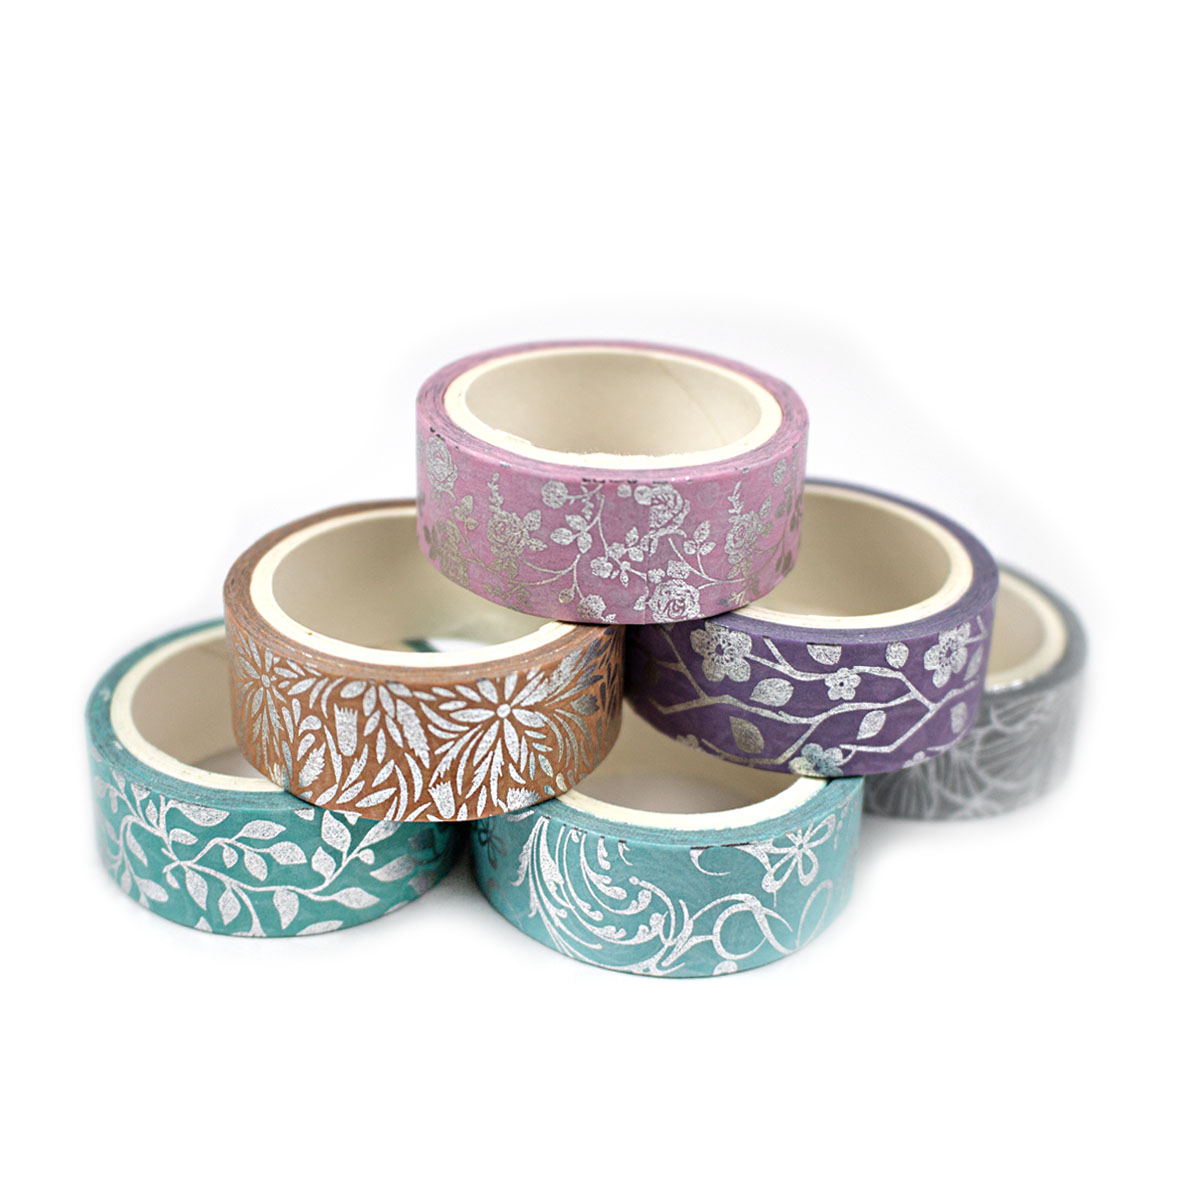 Set de 6 Washi Tape (Cinta adhesiva decorativa) con diseño vegetal